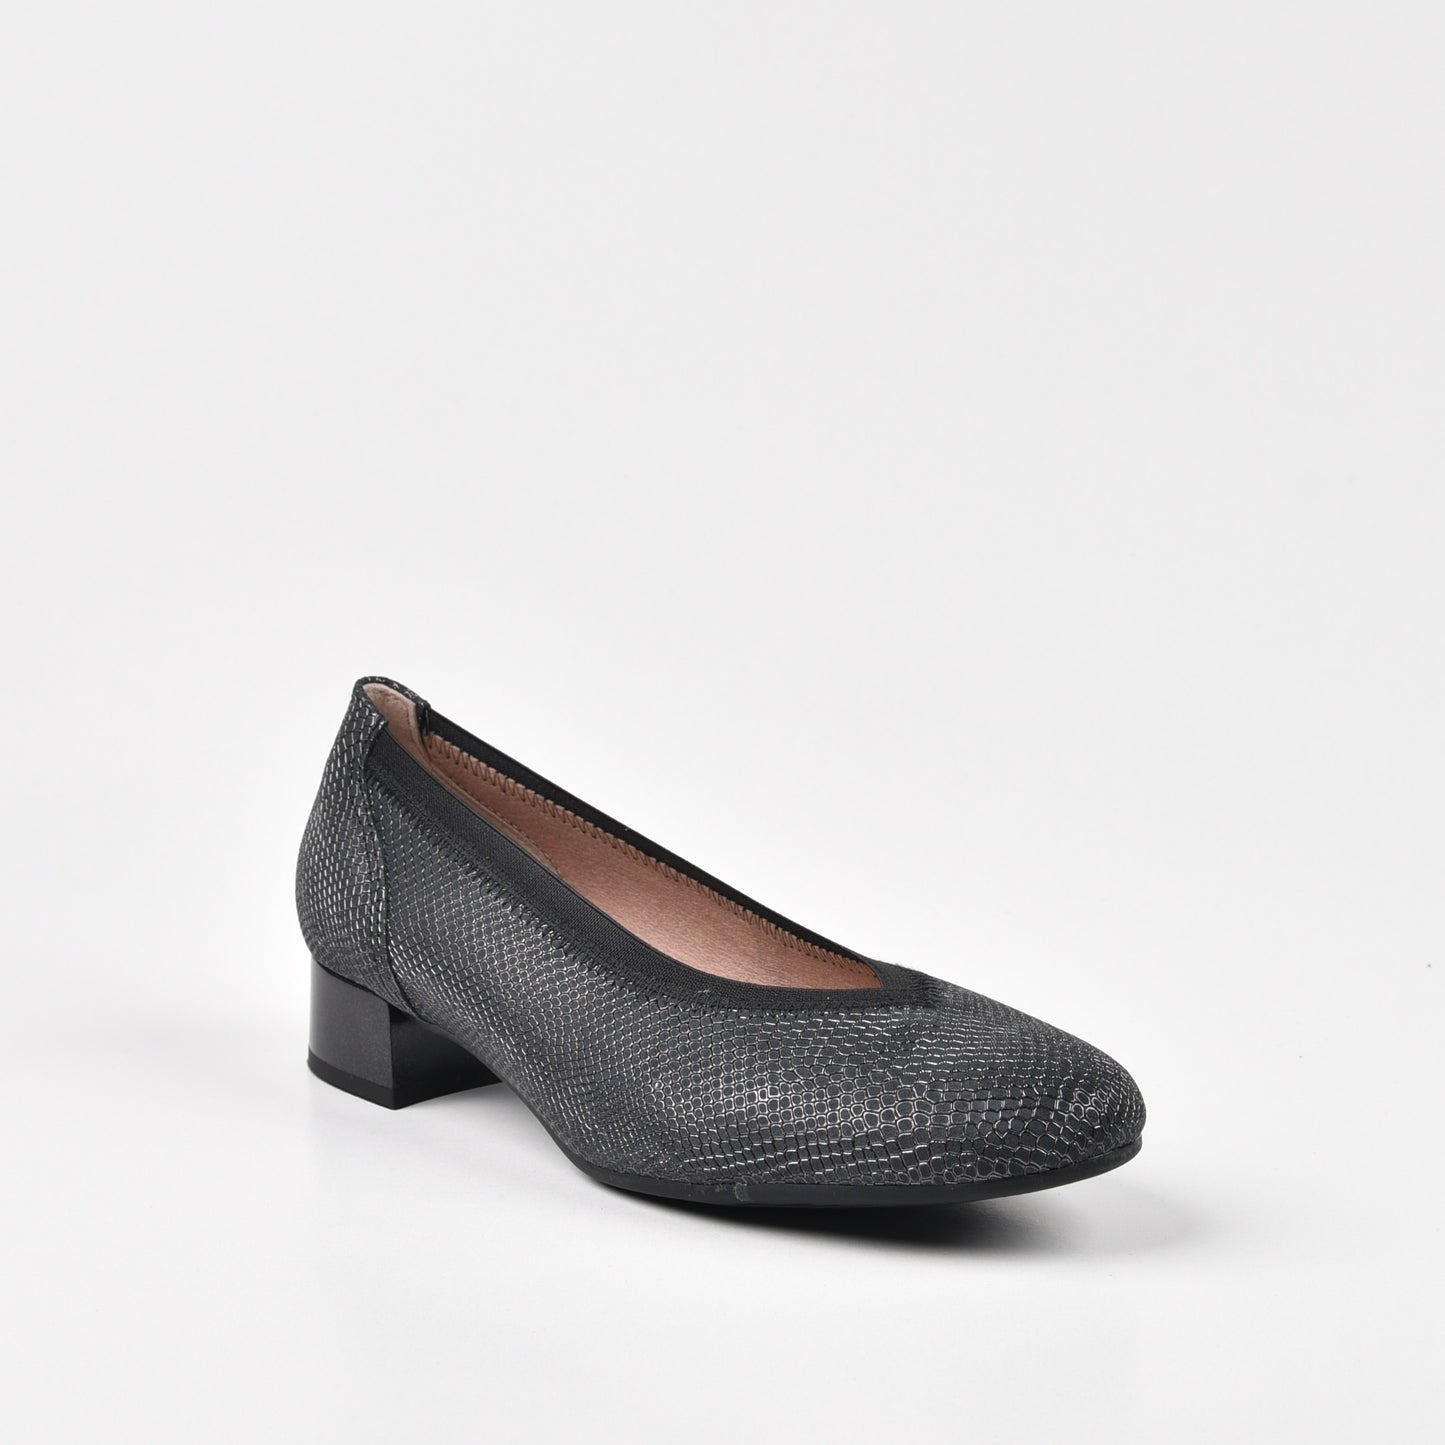 Pitillos Spanish Classic Low Heel Shoe for Women in Black.